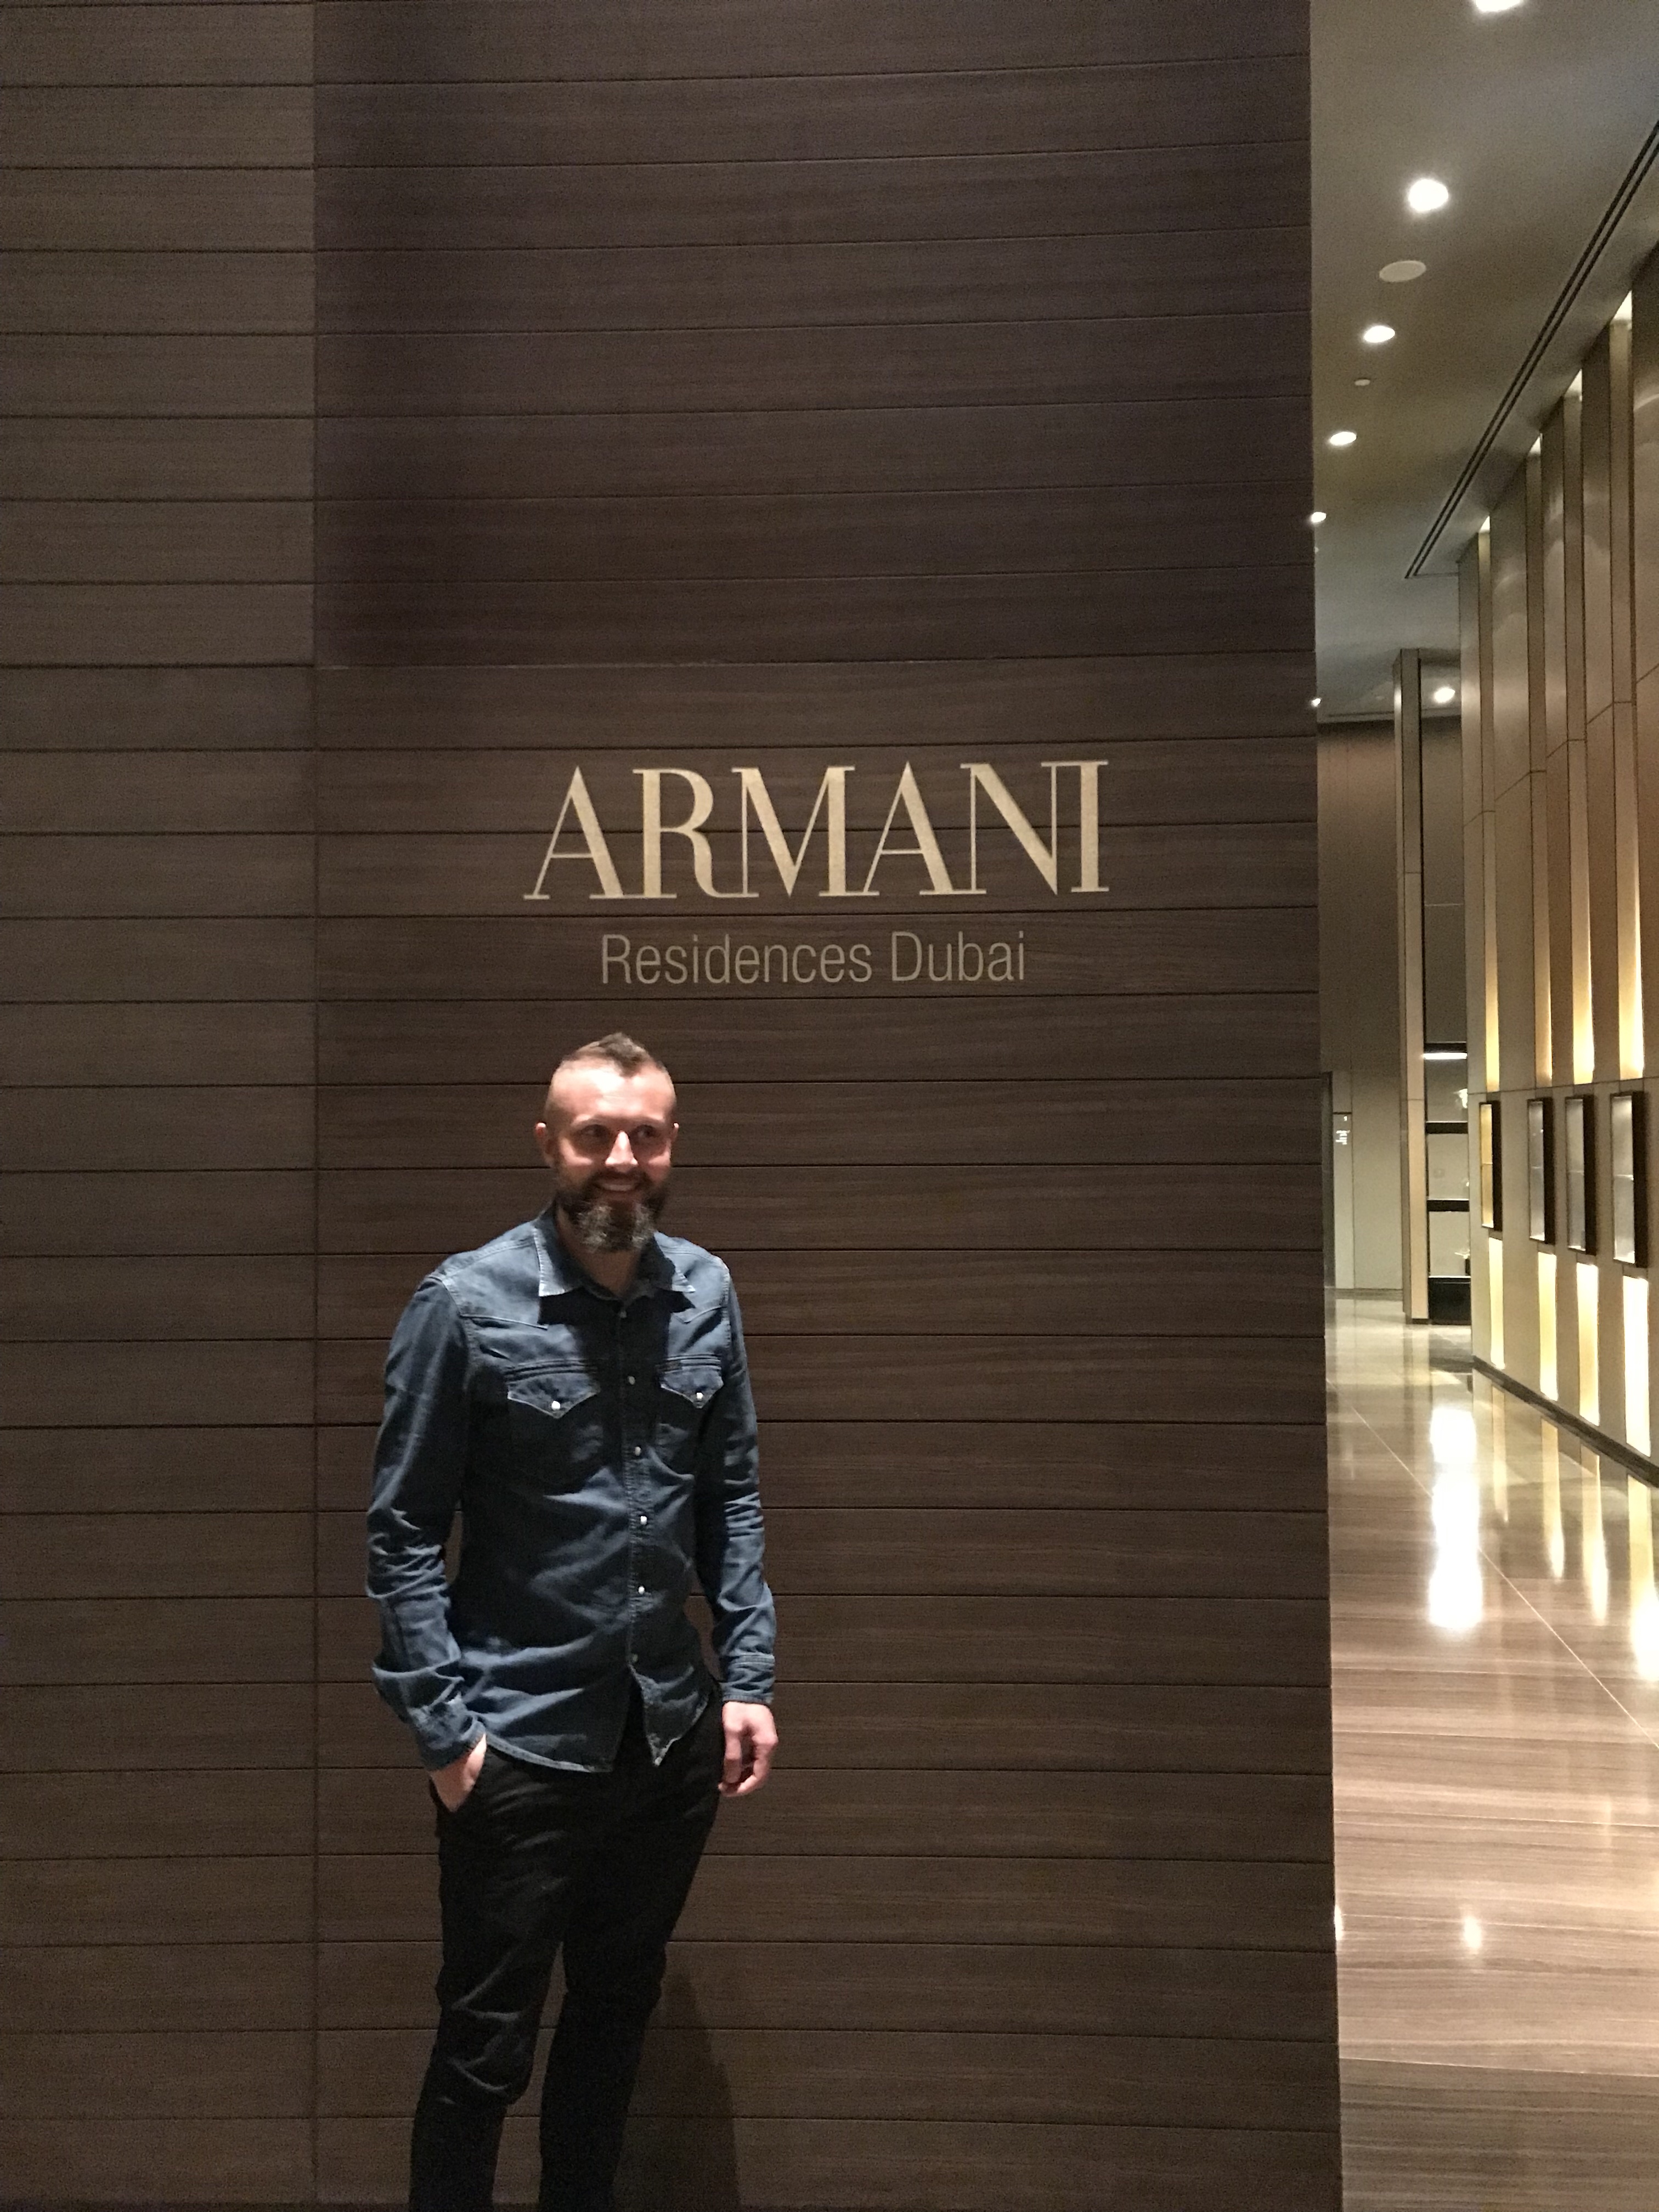 Armani residents Dubai